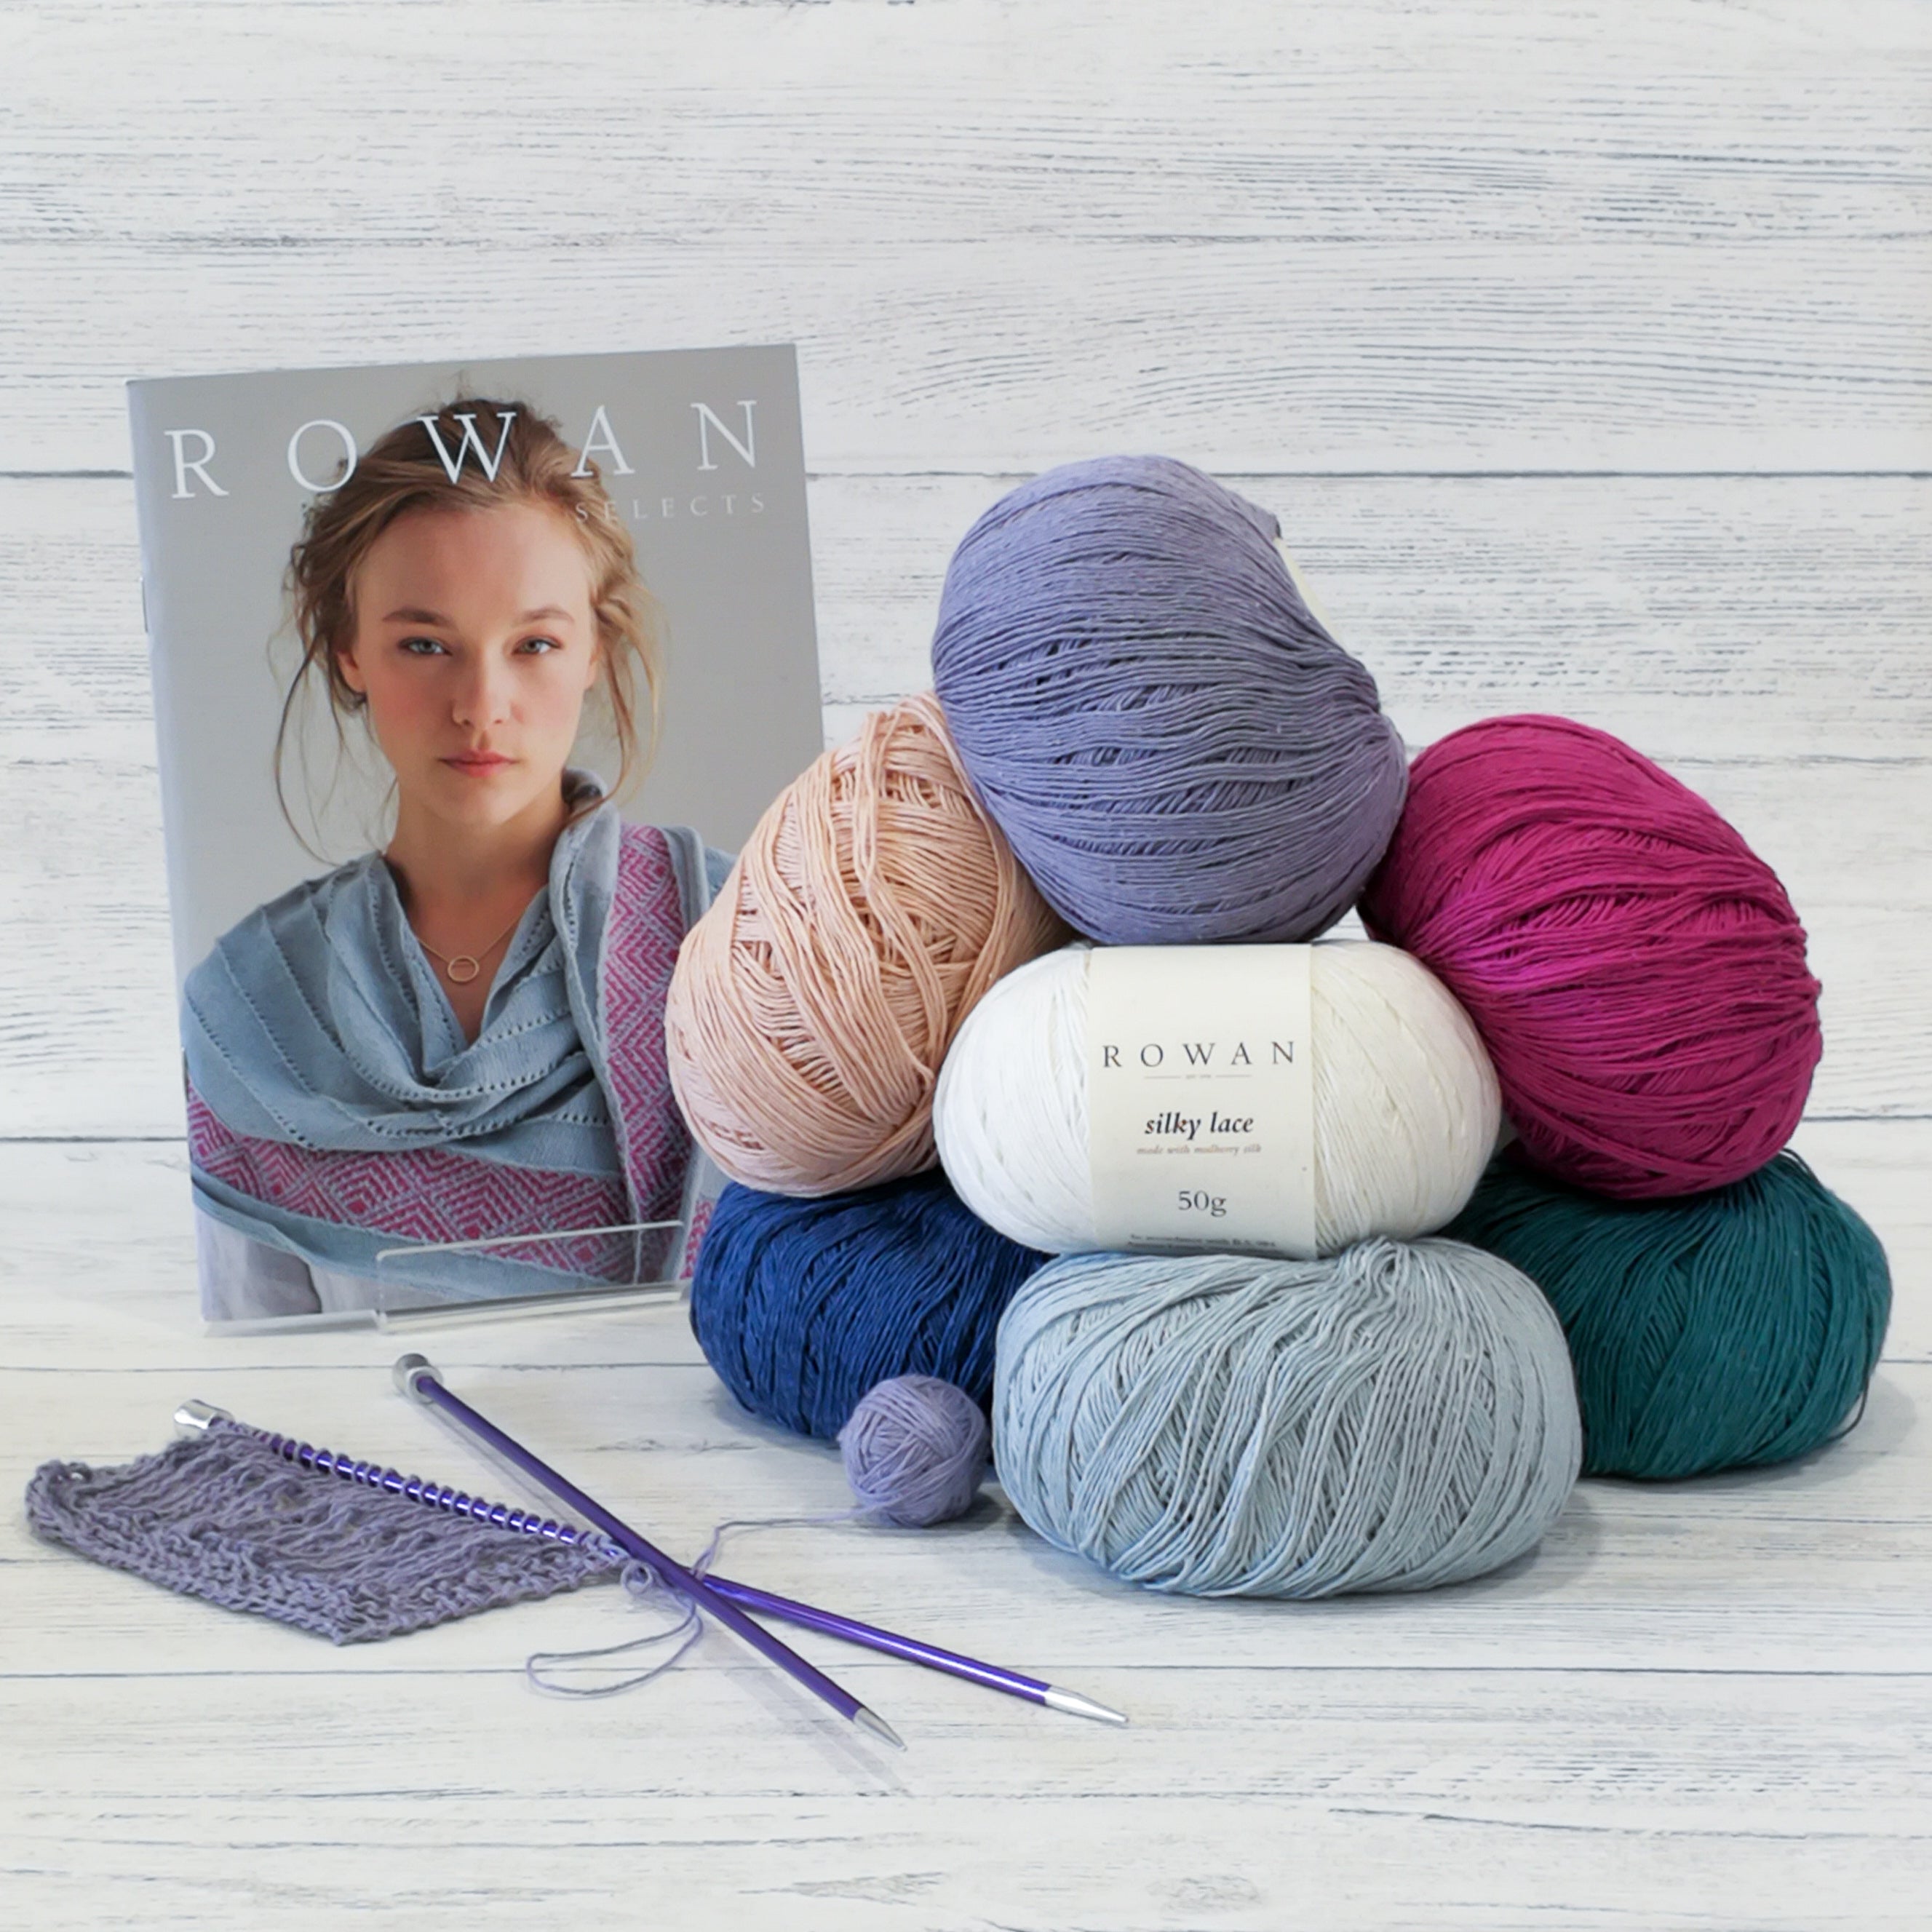 Stack of Rowan wool, knitting needles and Rowan pattern book